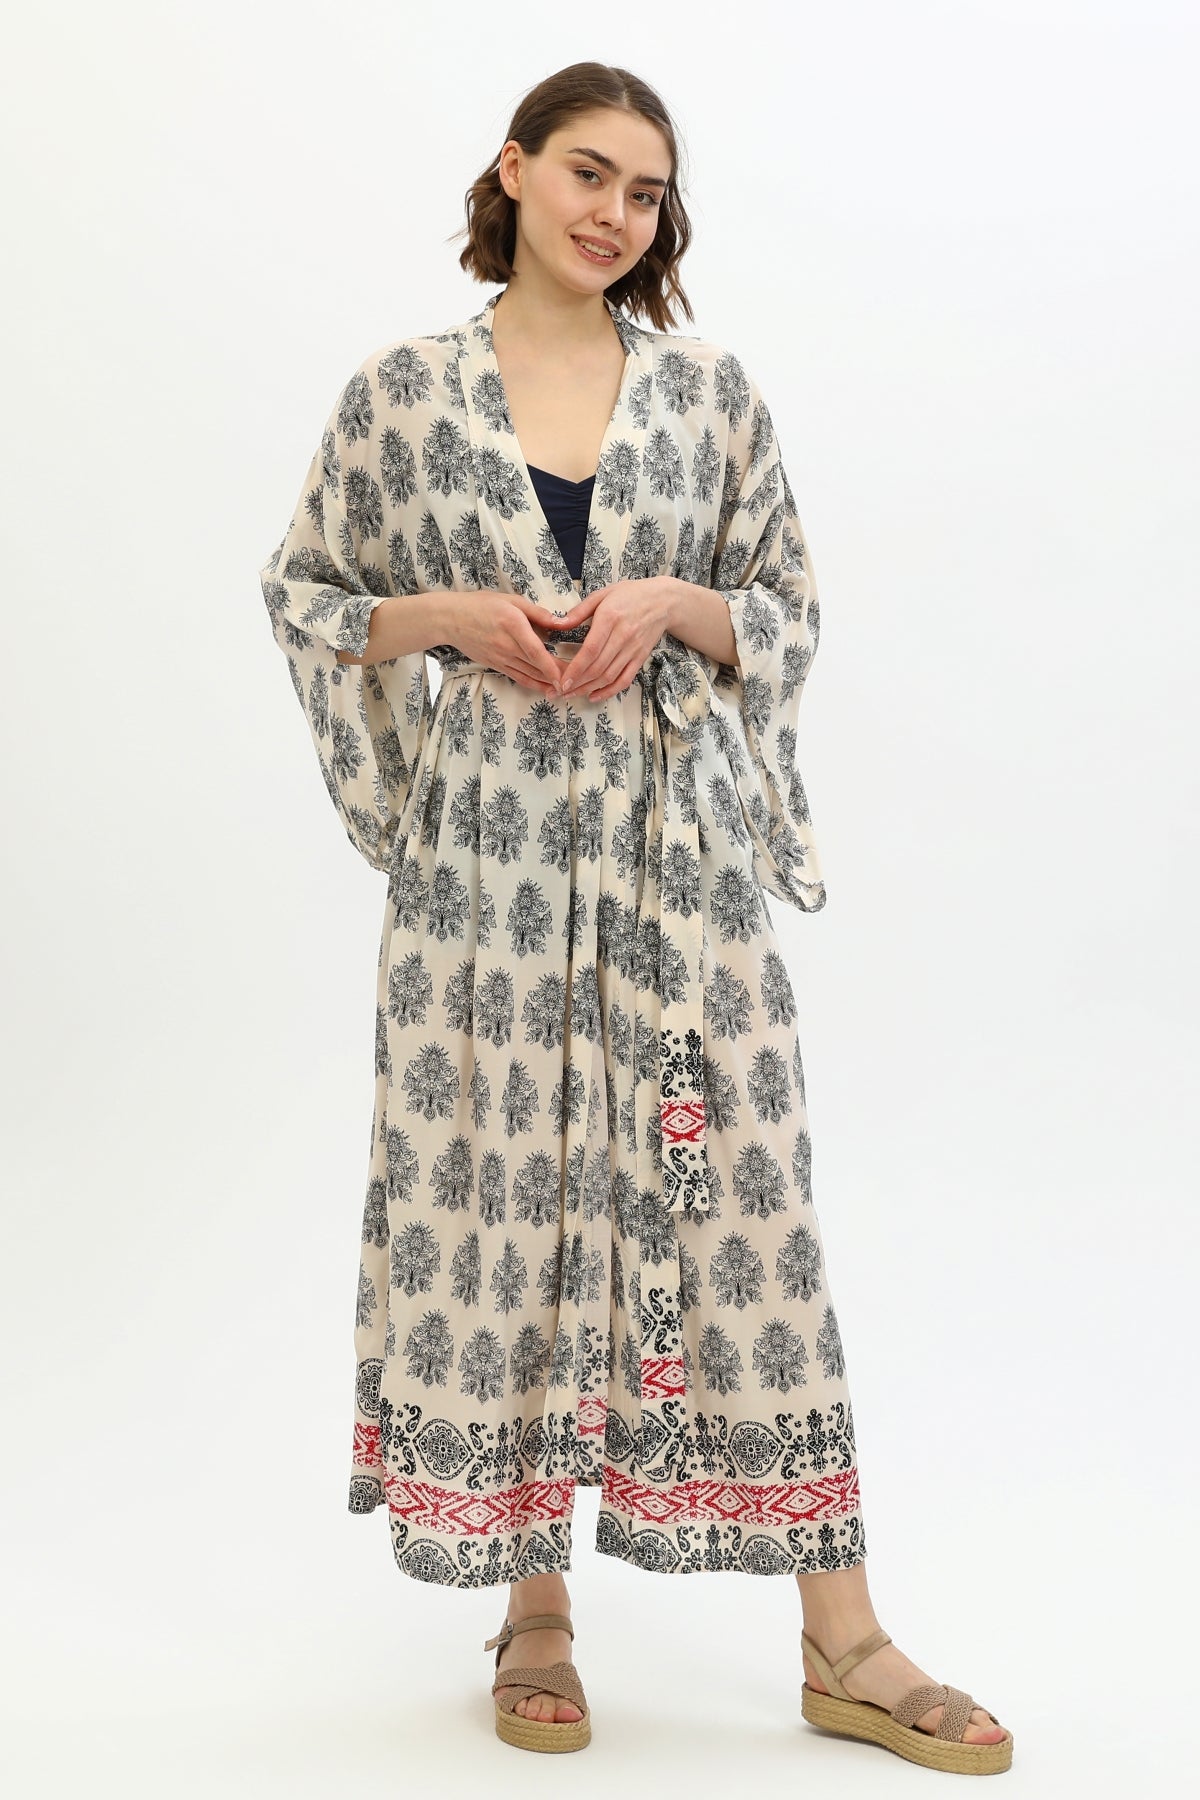 Zada - Kimono Long - Cream Paisley